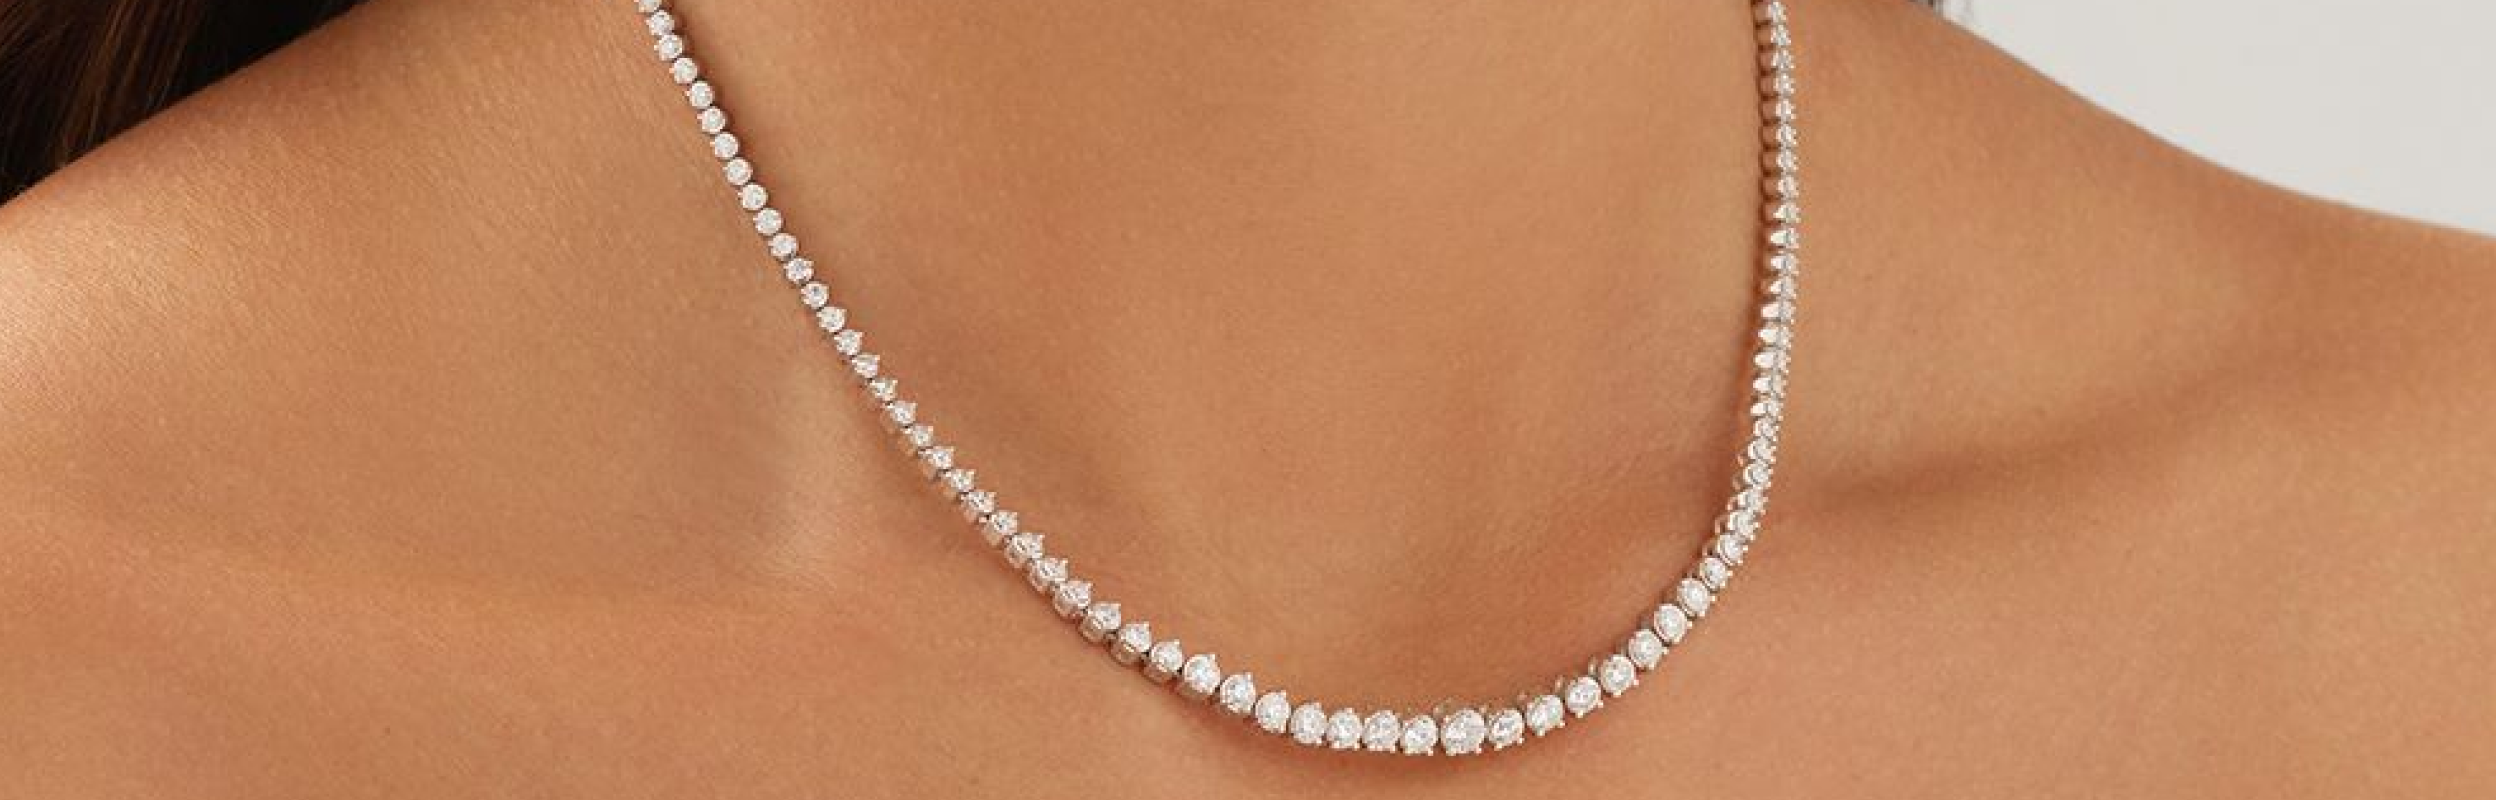 diamond tennis necklace on womans neck